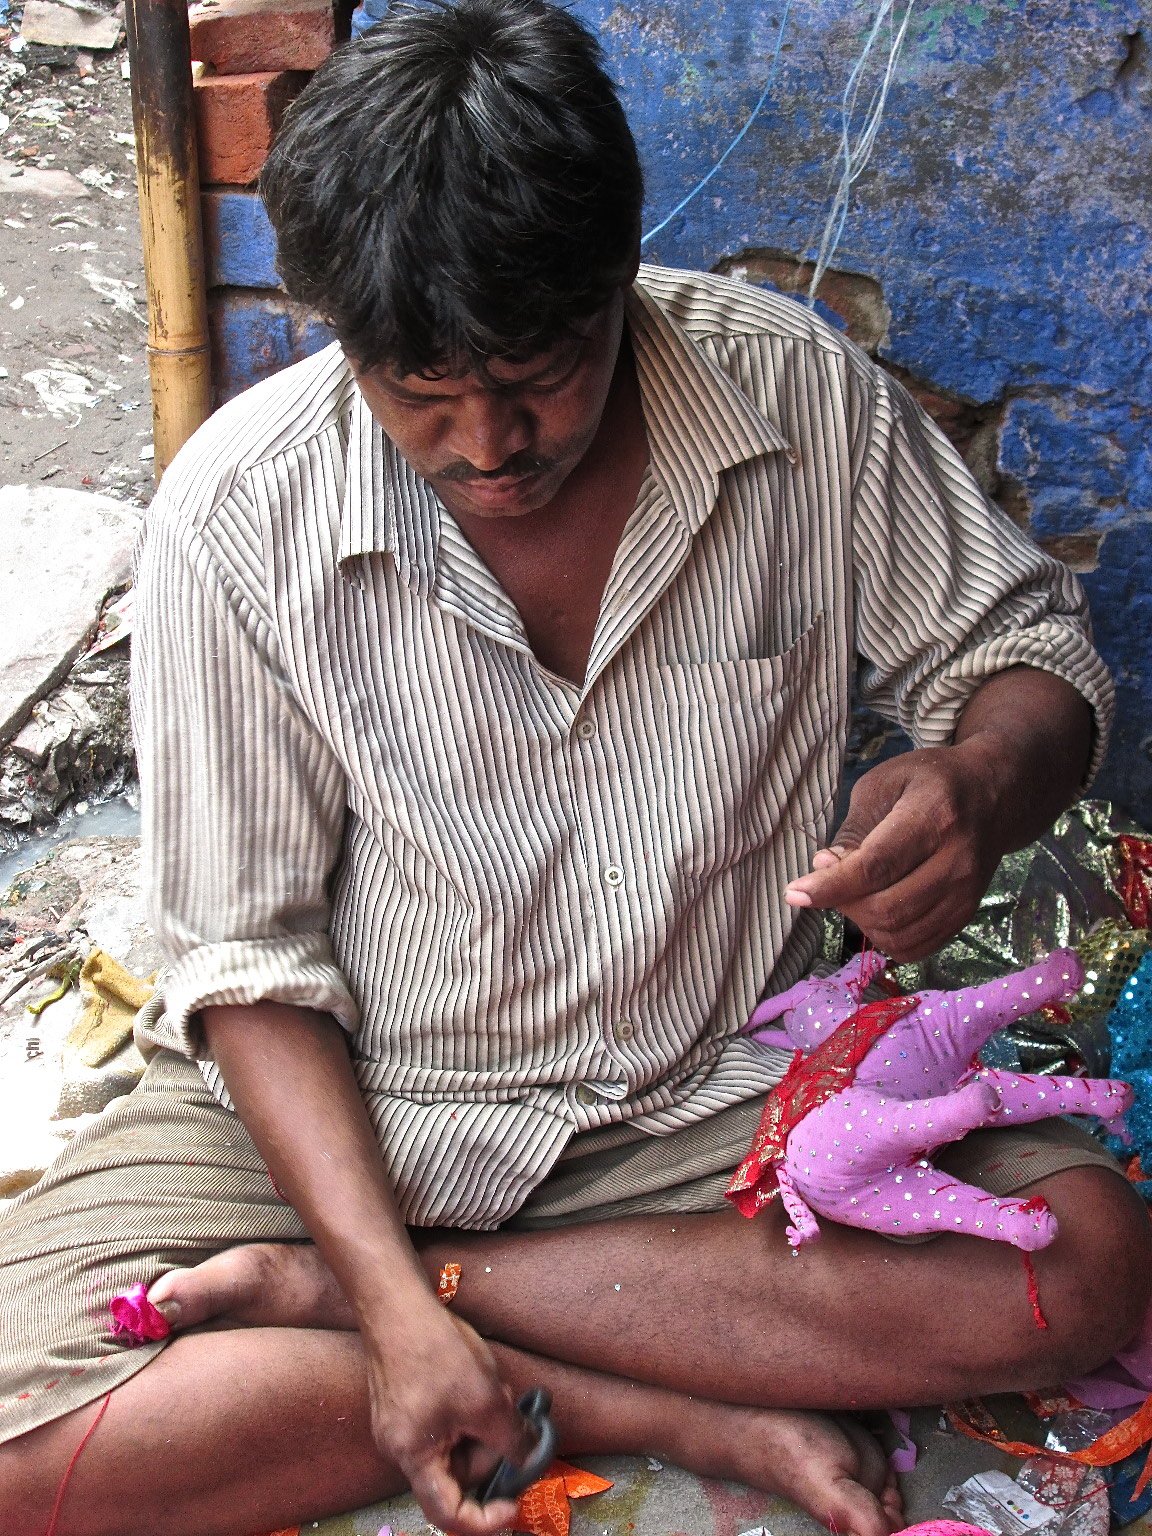 Man making puppets in Delhi's Kathputli Colony

